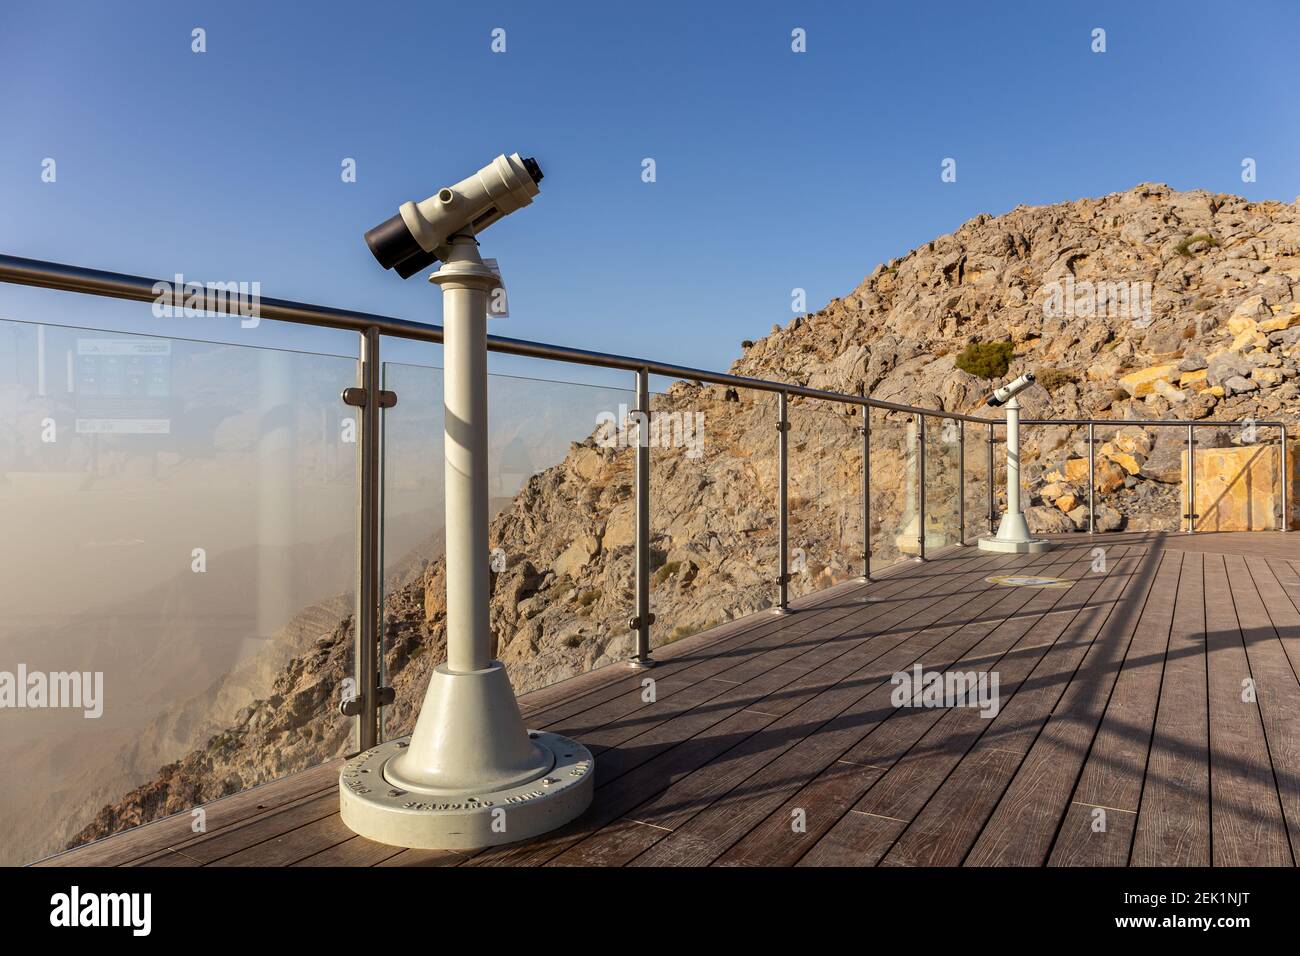 Jebel Jais Viewing Deck Park with coin operated binoculars overlooking Hajar Mountains, UAE. Stock Photo